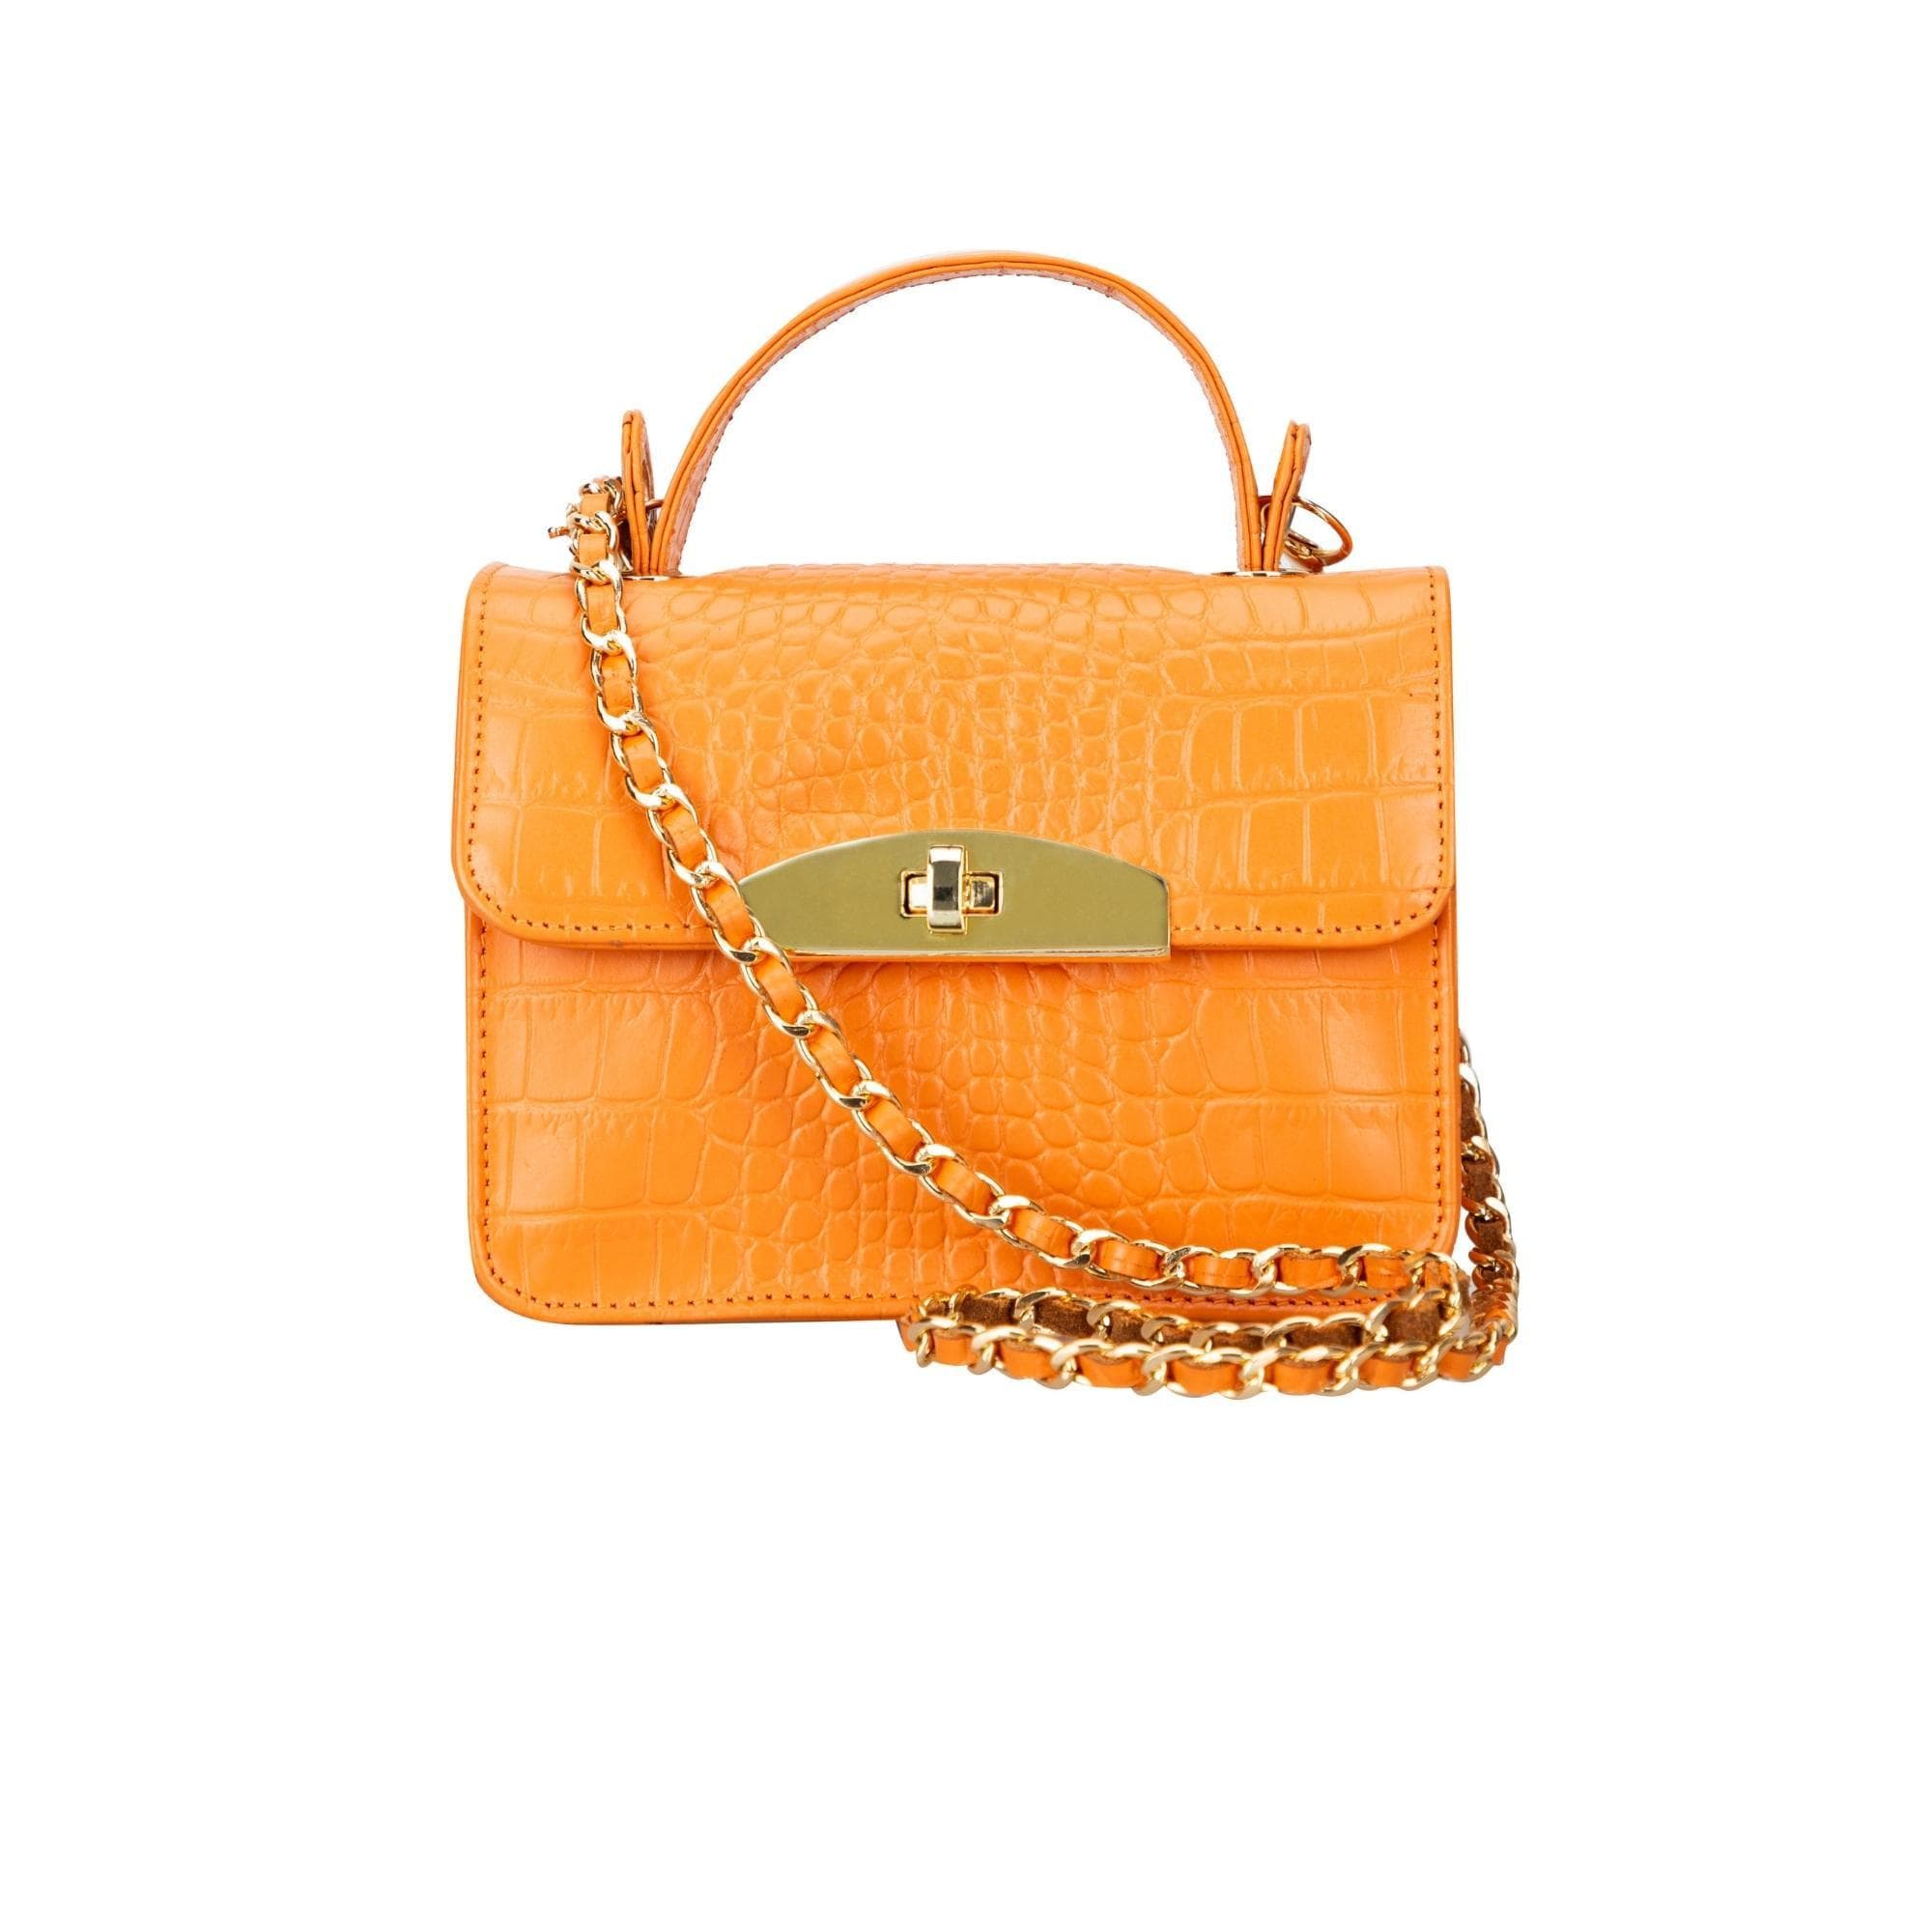 Alisha Geniune Leather Women’s Bag Orange Croc Bouletta